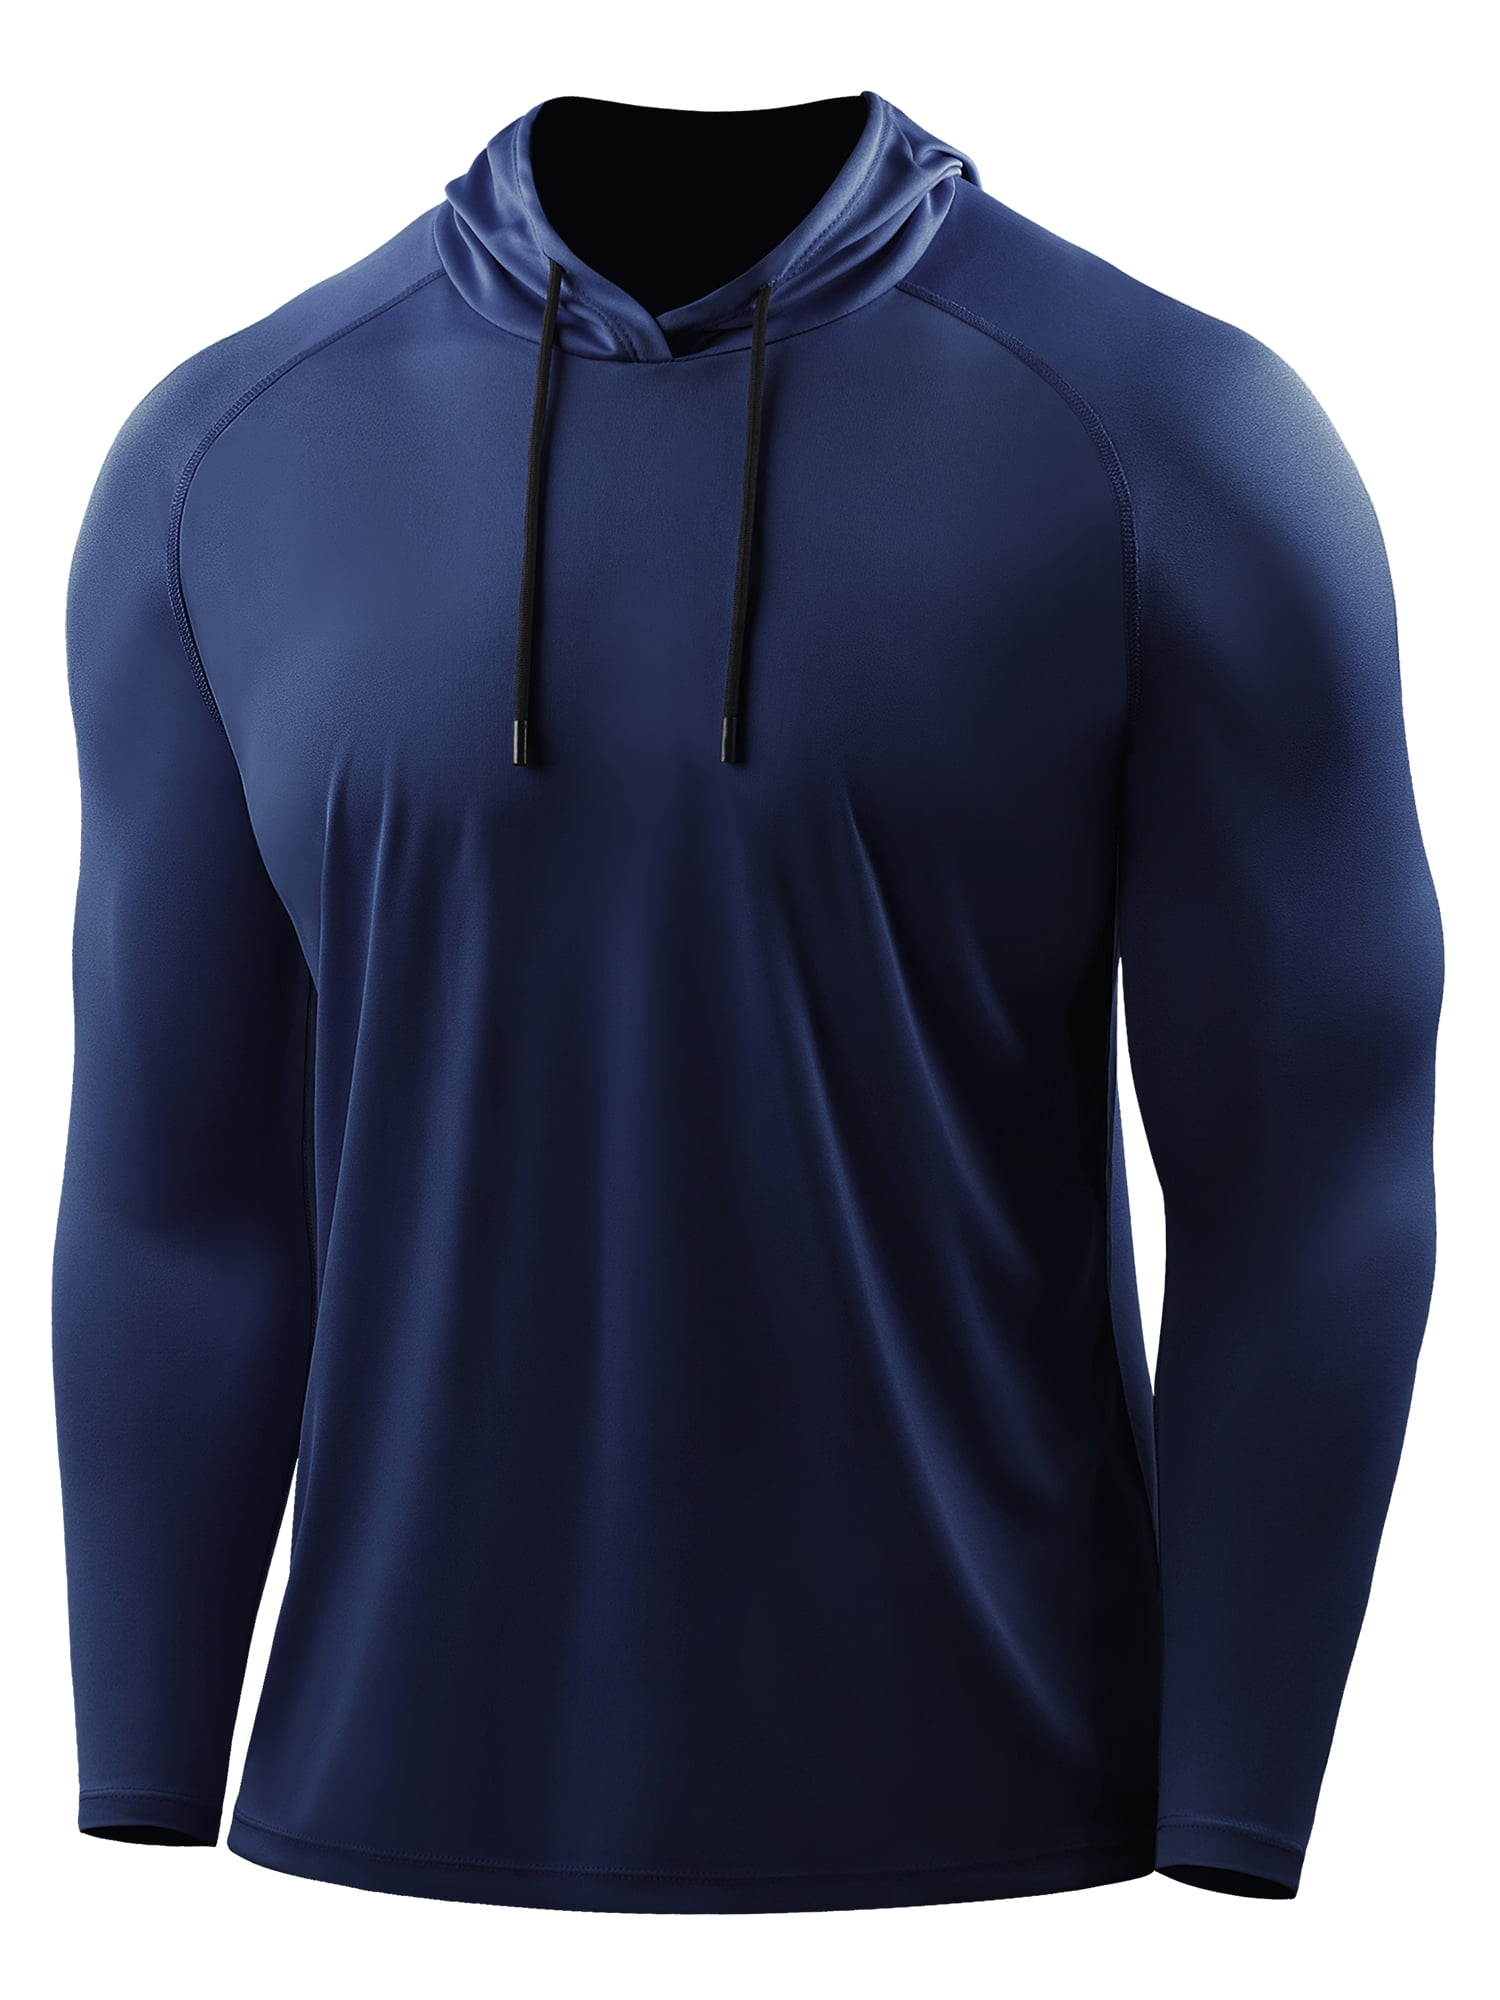 Mens Huk Logo Hoodie Pullover Sweatshirt Size XL Outdoor Fishing Casual  Orange🔥